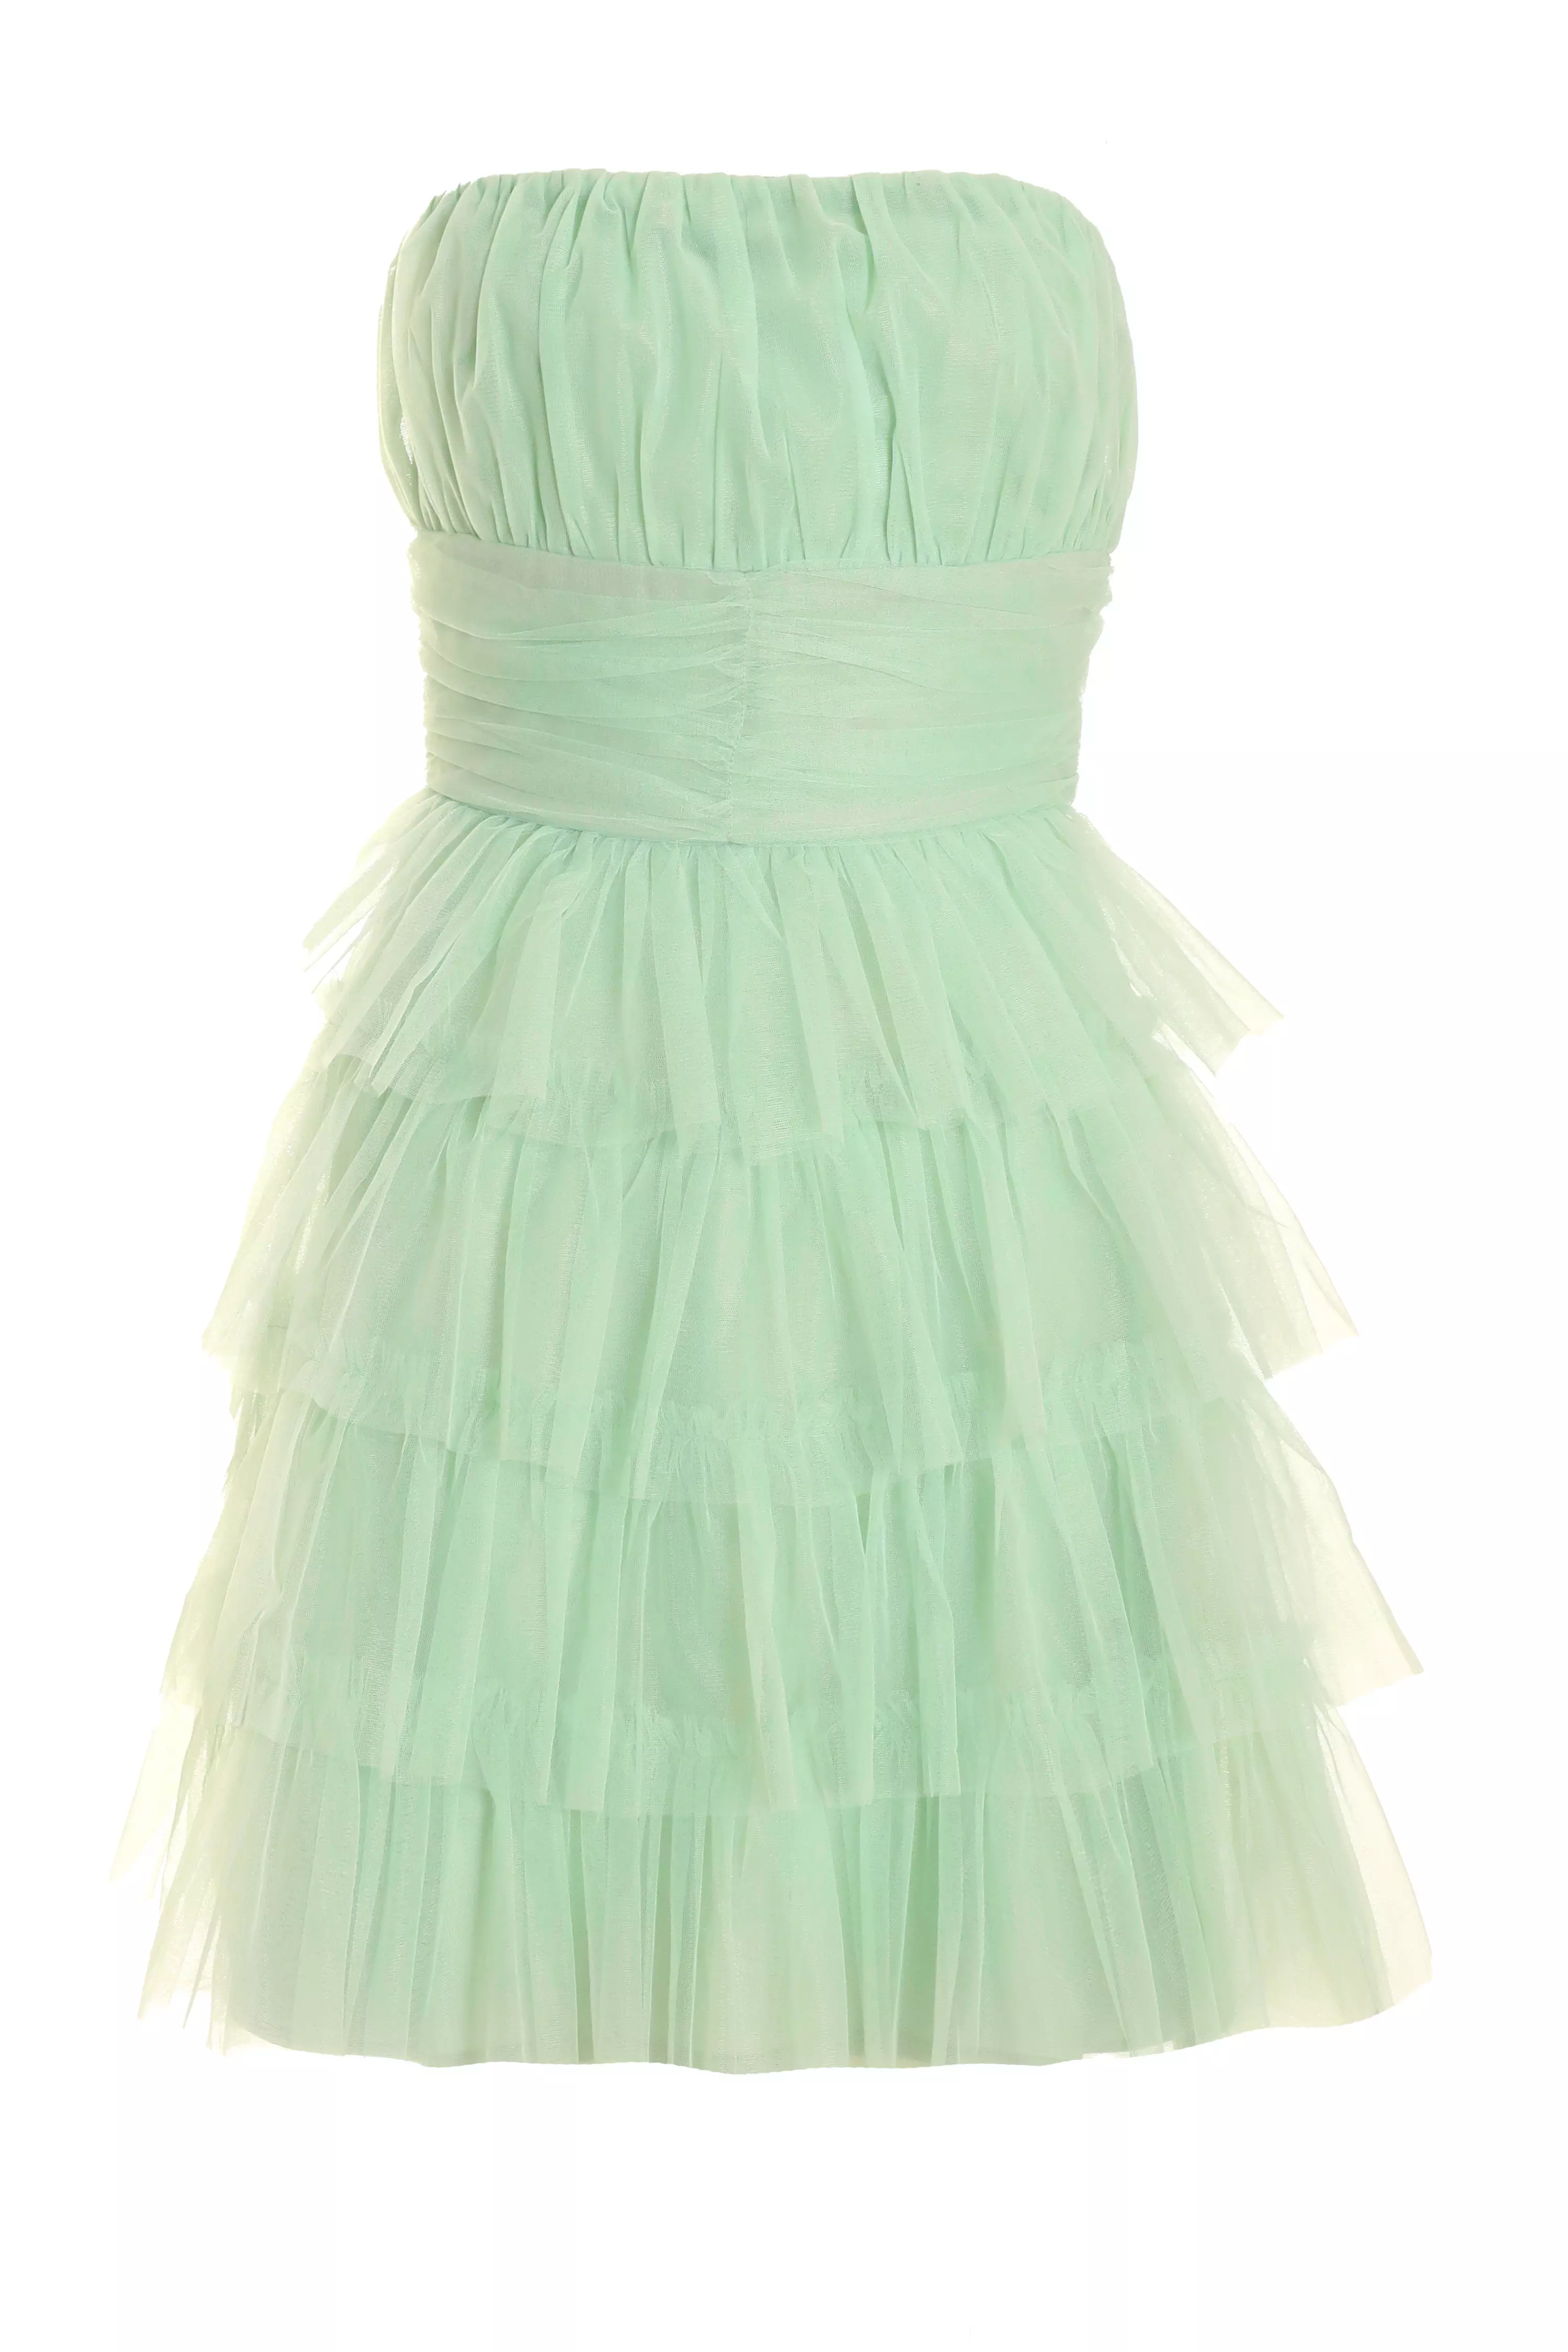 Sage Green Tulle Mini Dress - QUIZ Clothing